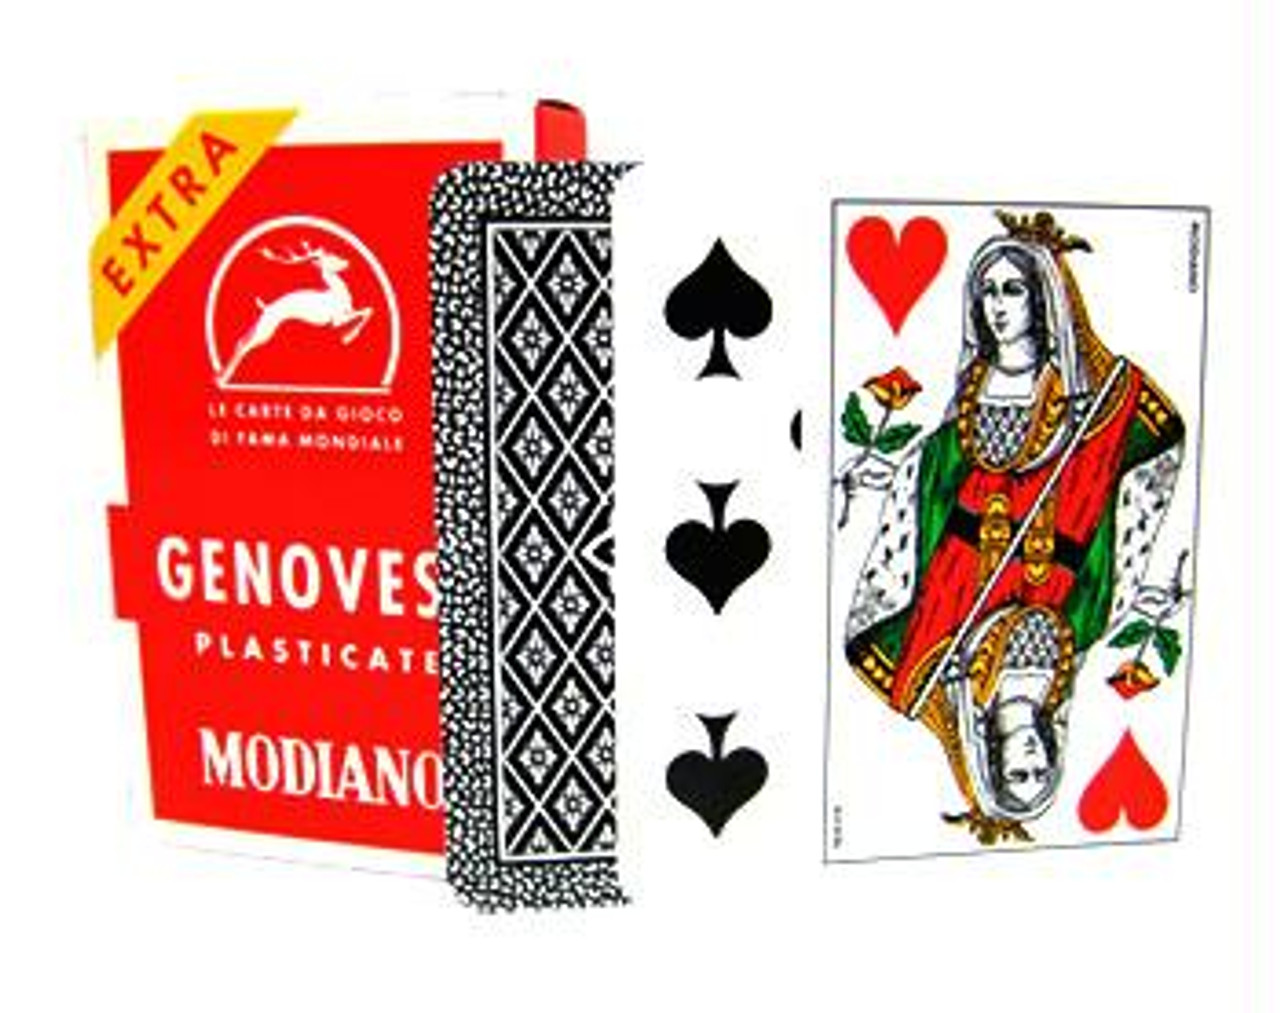 Brand new, Hermes set of 2 decks of poker playing - Depop